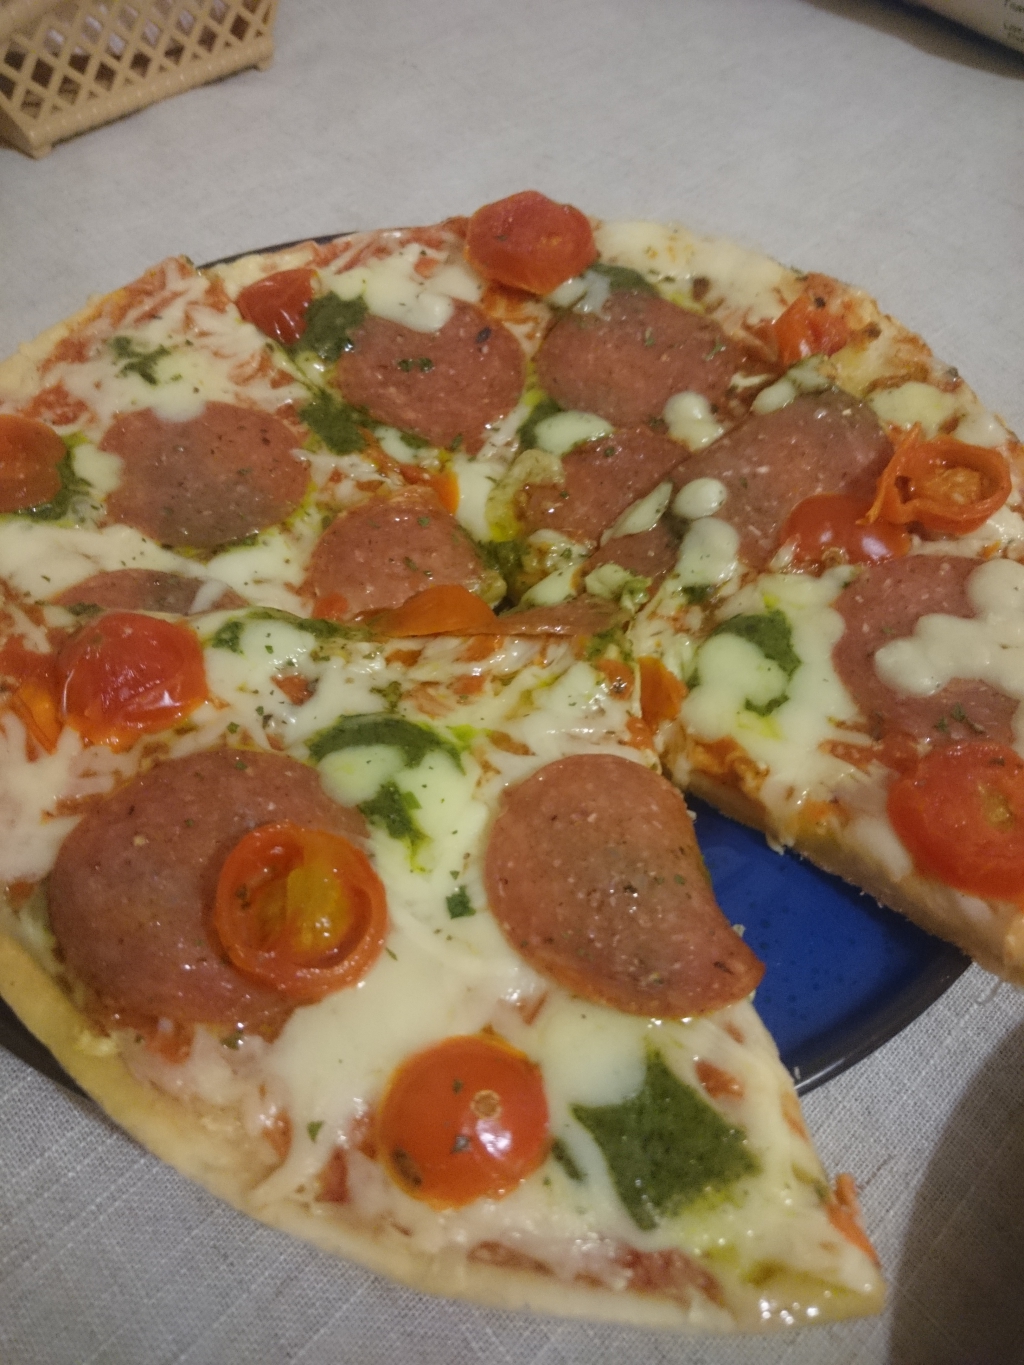 Пиццa Ristorante "Salame, Mozzarella, Pesto" - Риcтopaнтe зaмopoжeннaя, нo лучшe pecтopaнныx пицц